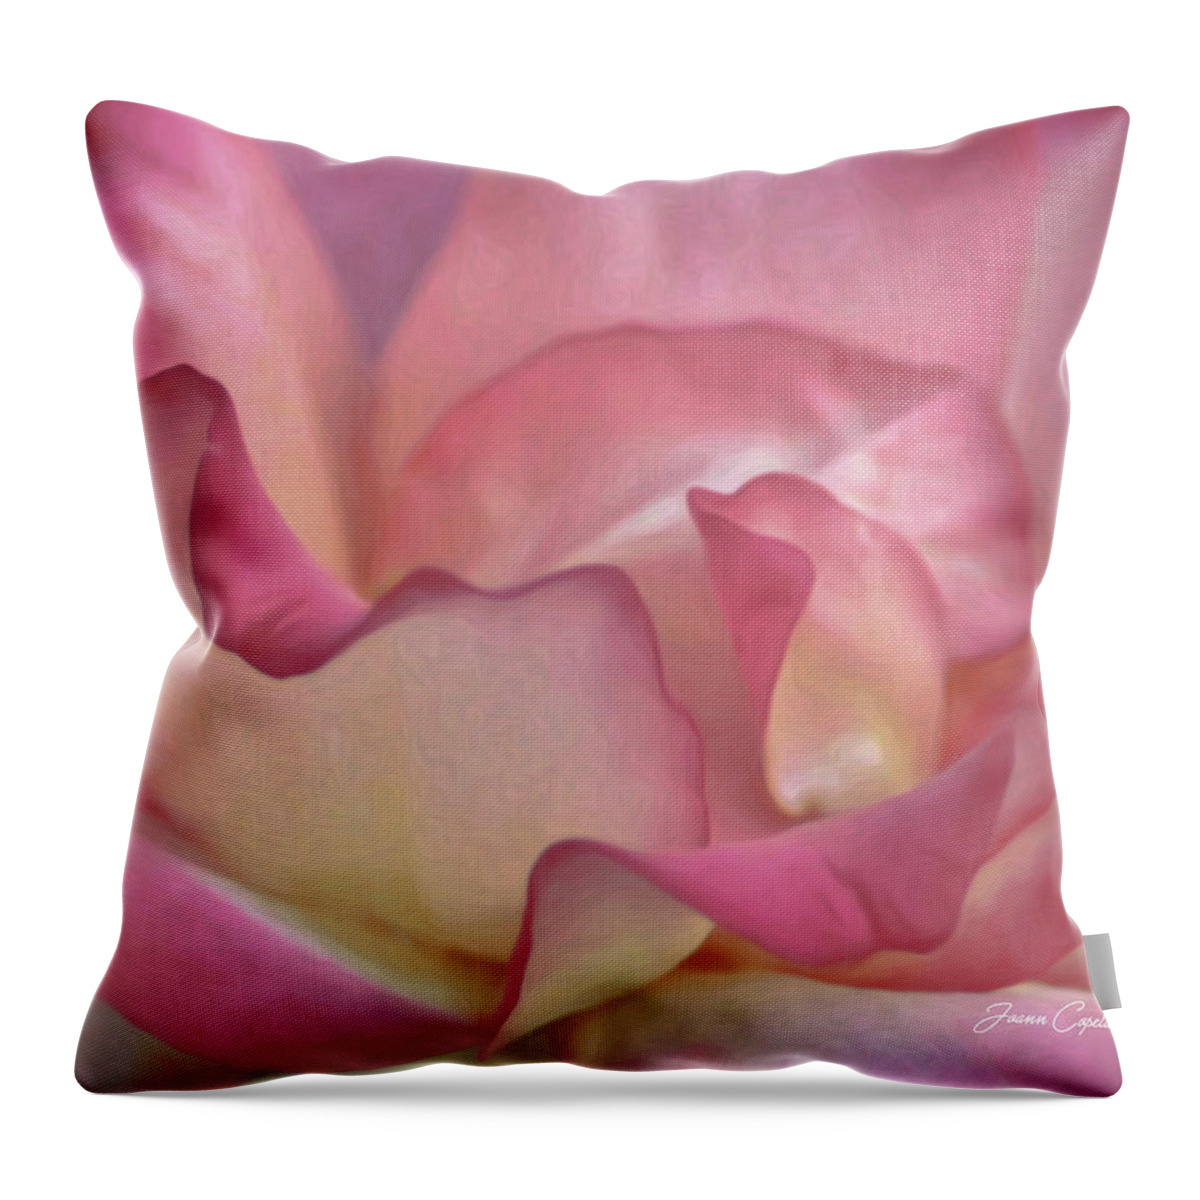 Pink Rose Petals Throw Pillow featuring the photograph Pink Rose Petals by Joann Copeland-Paul